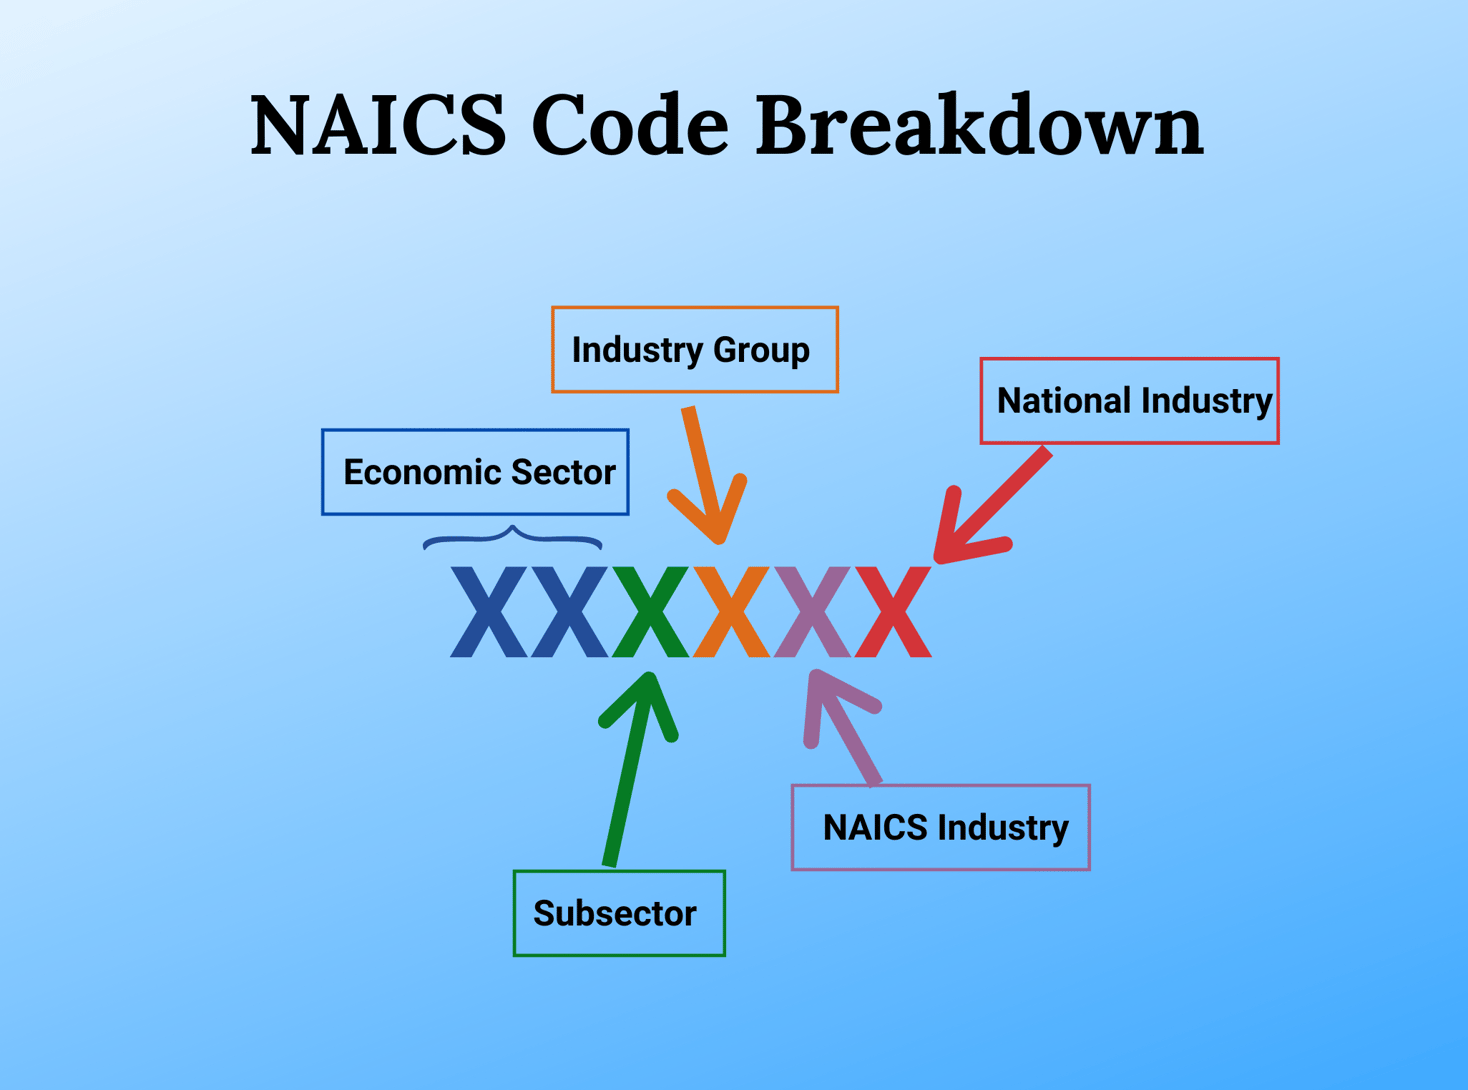 research company naics code